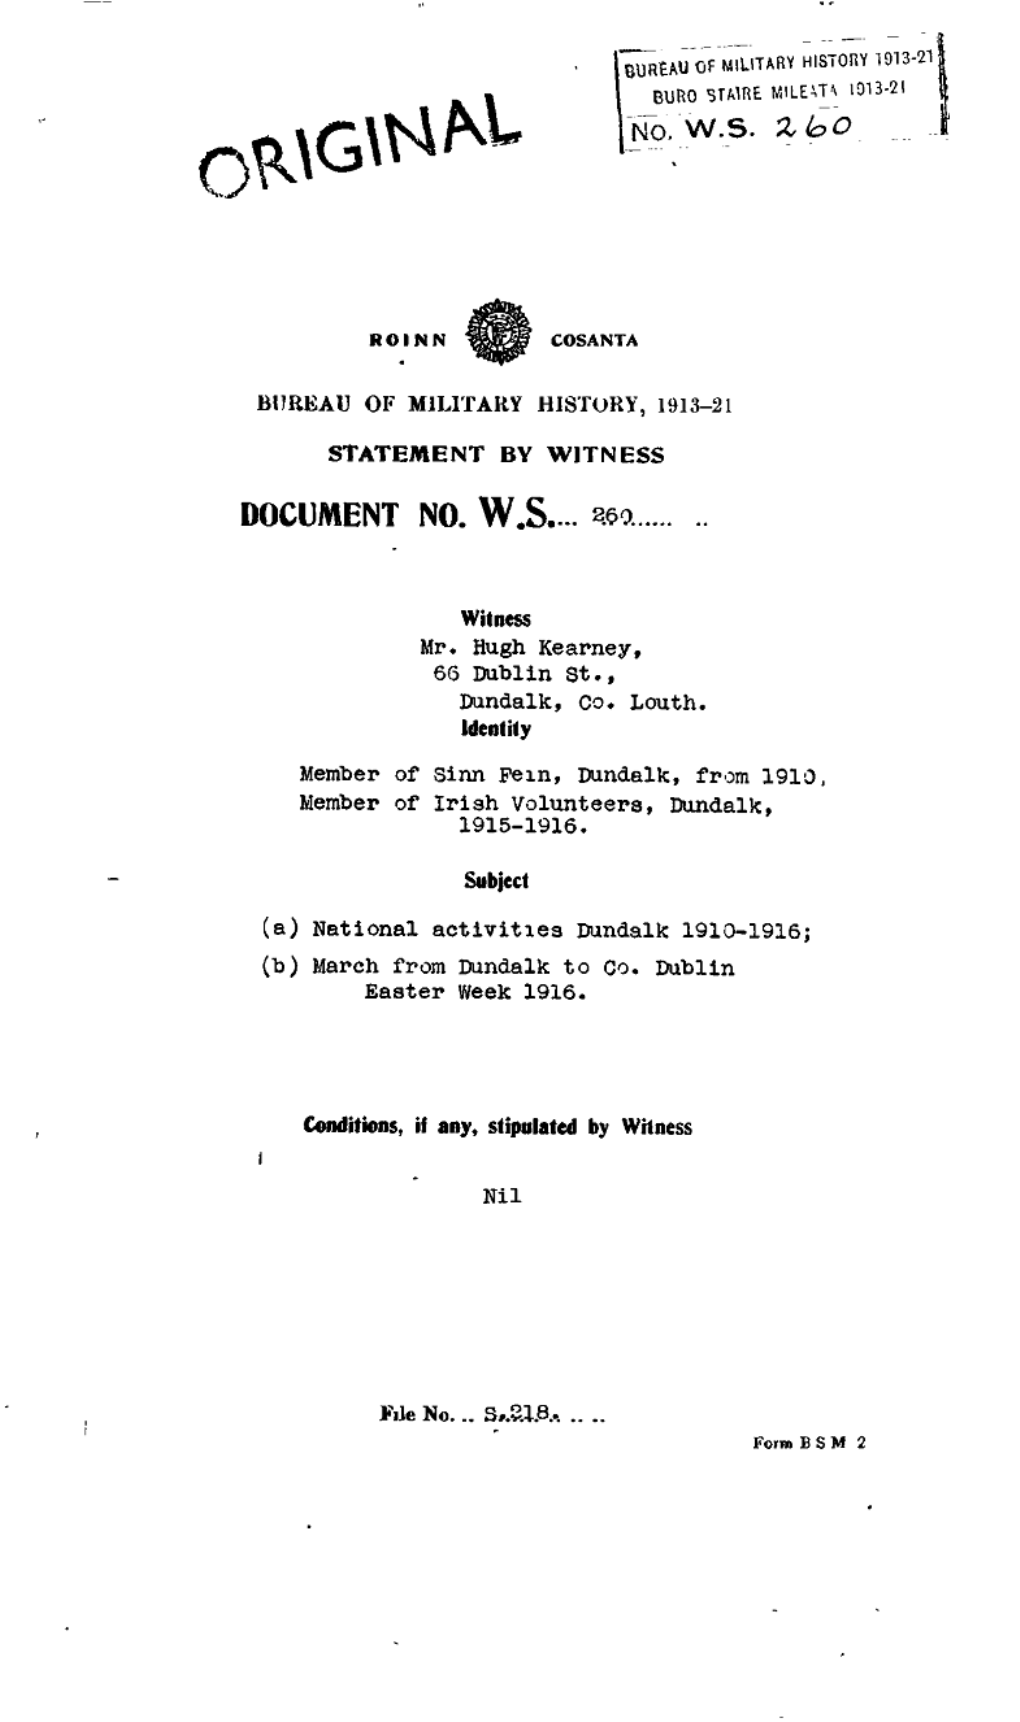 Roinn Cosata Bureau of Military History, 1913-21